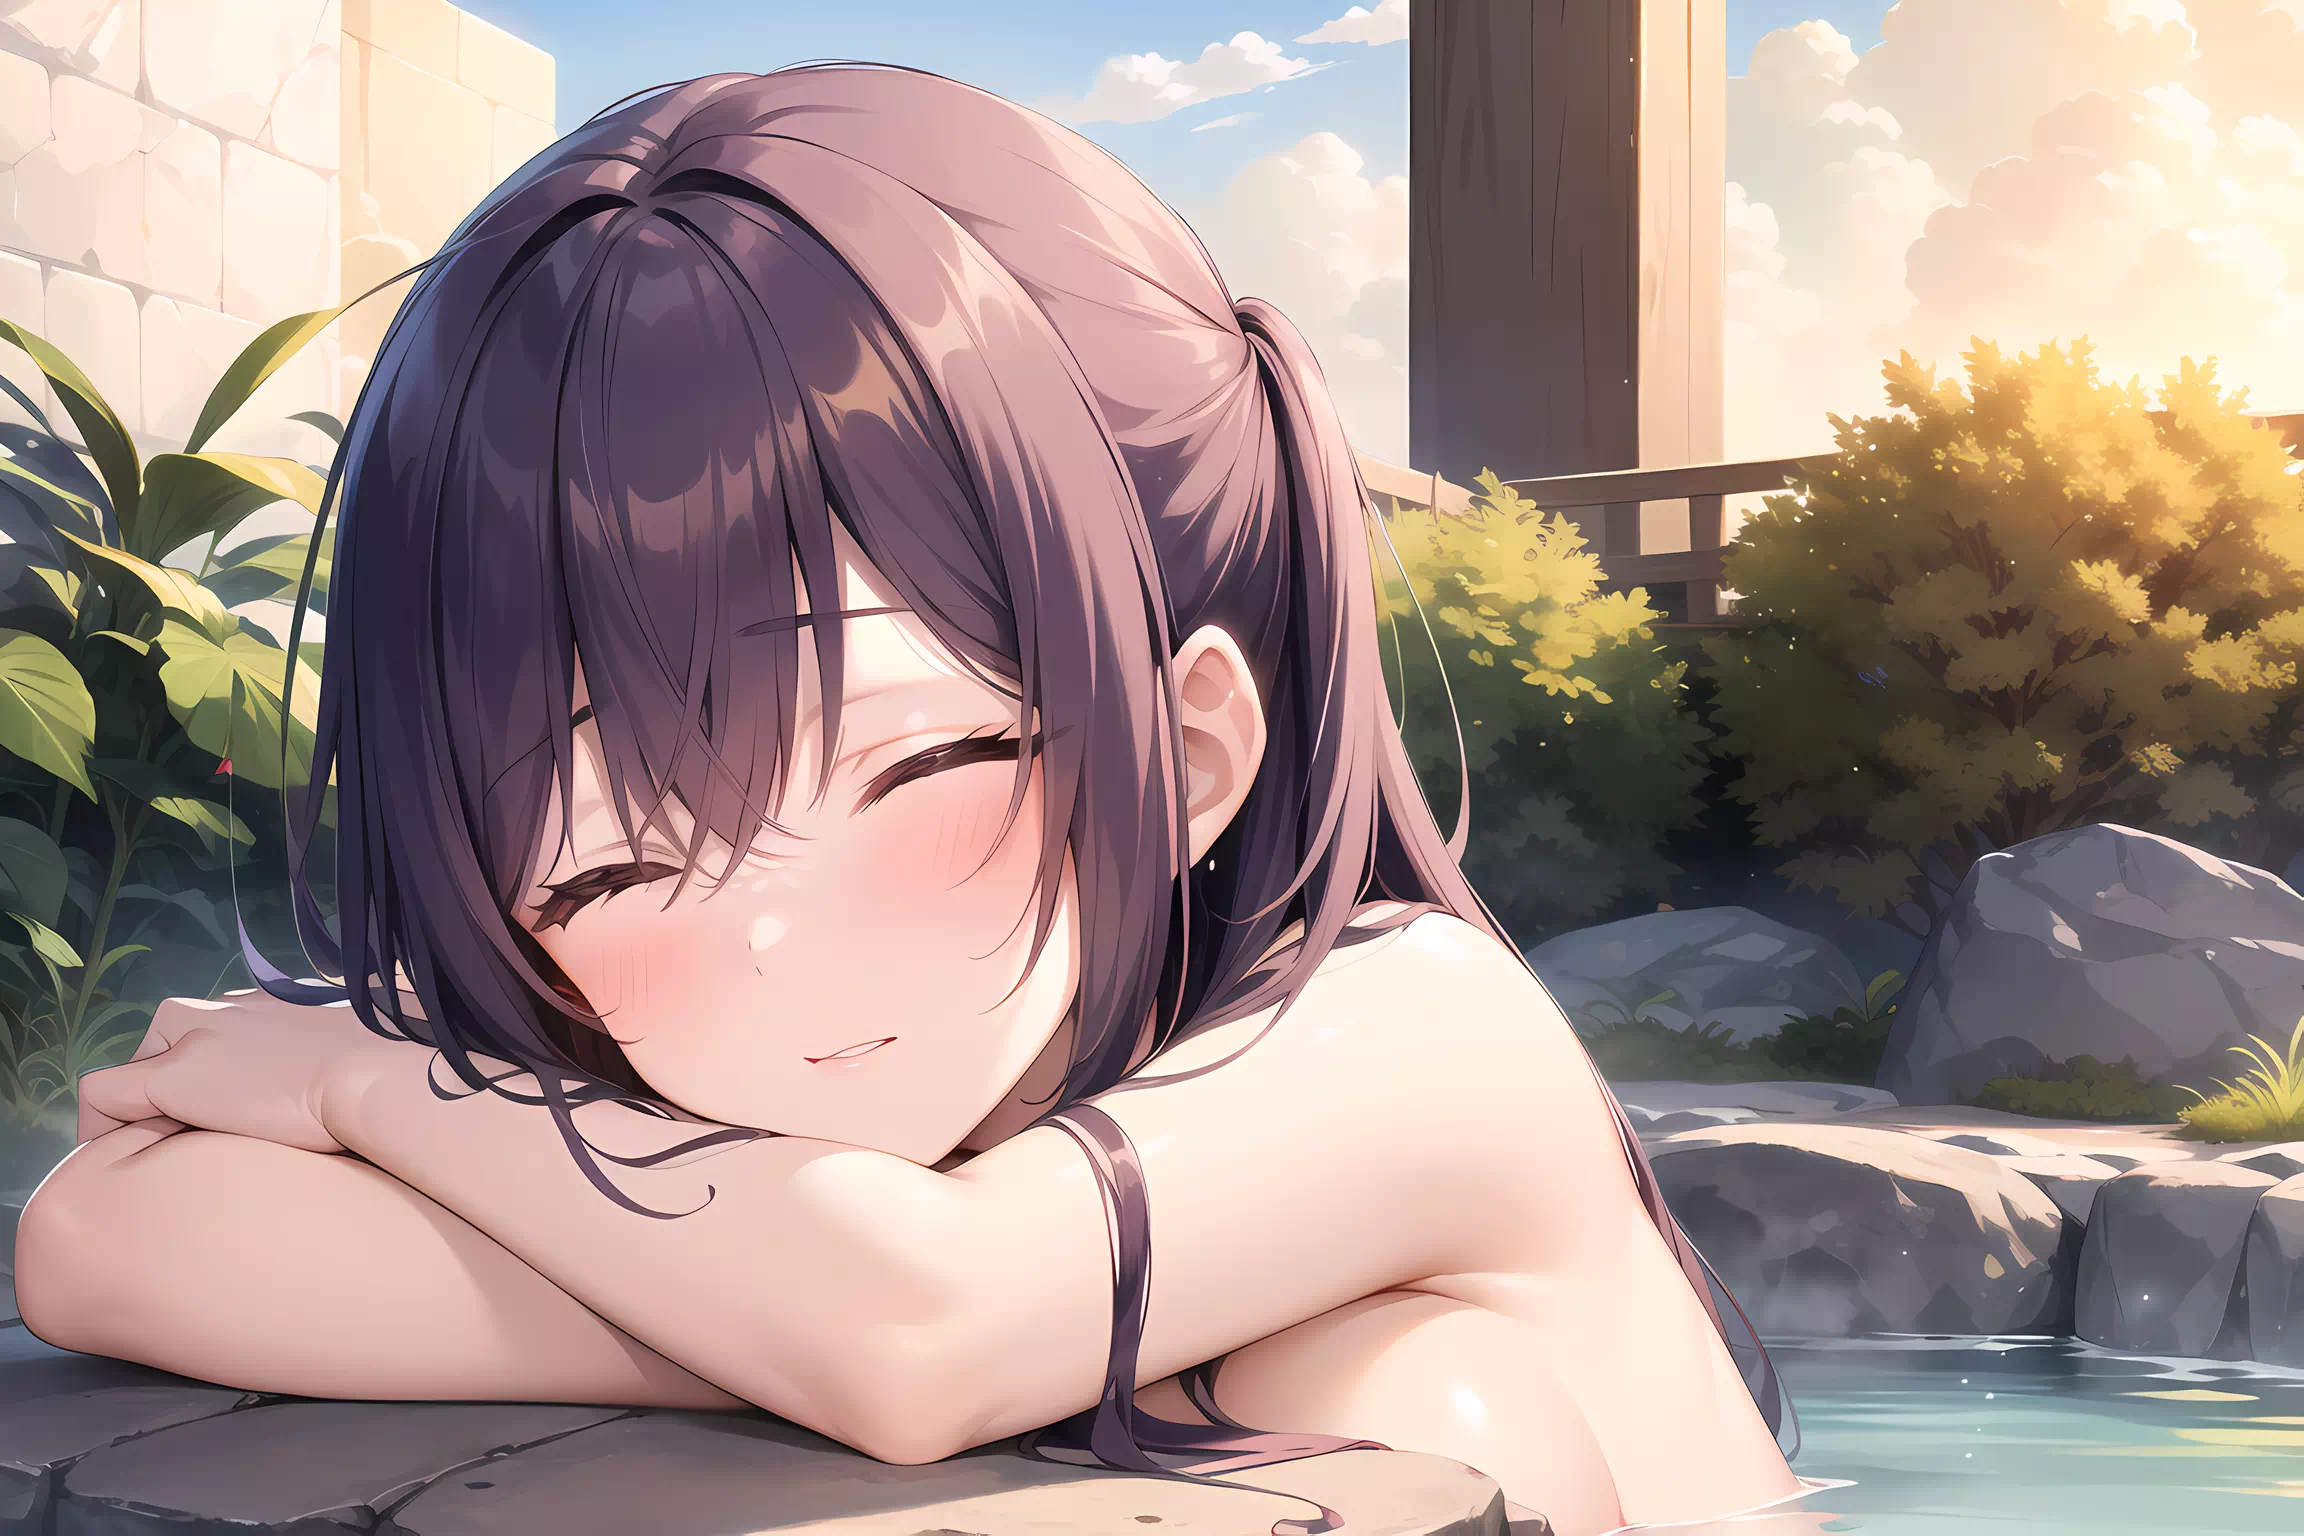 Enjoy hot spring